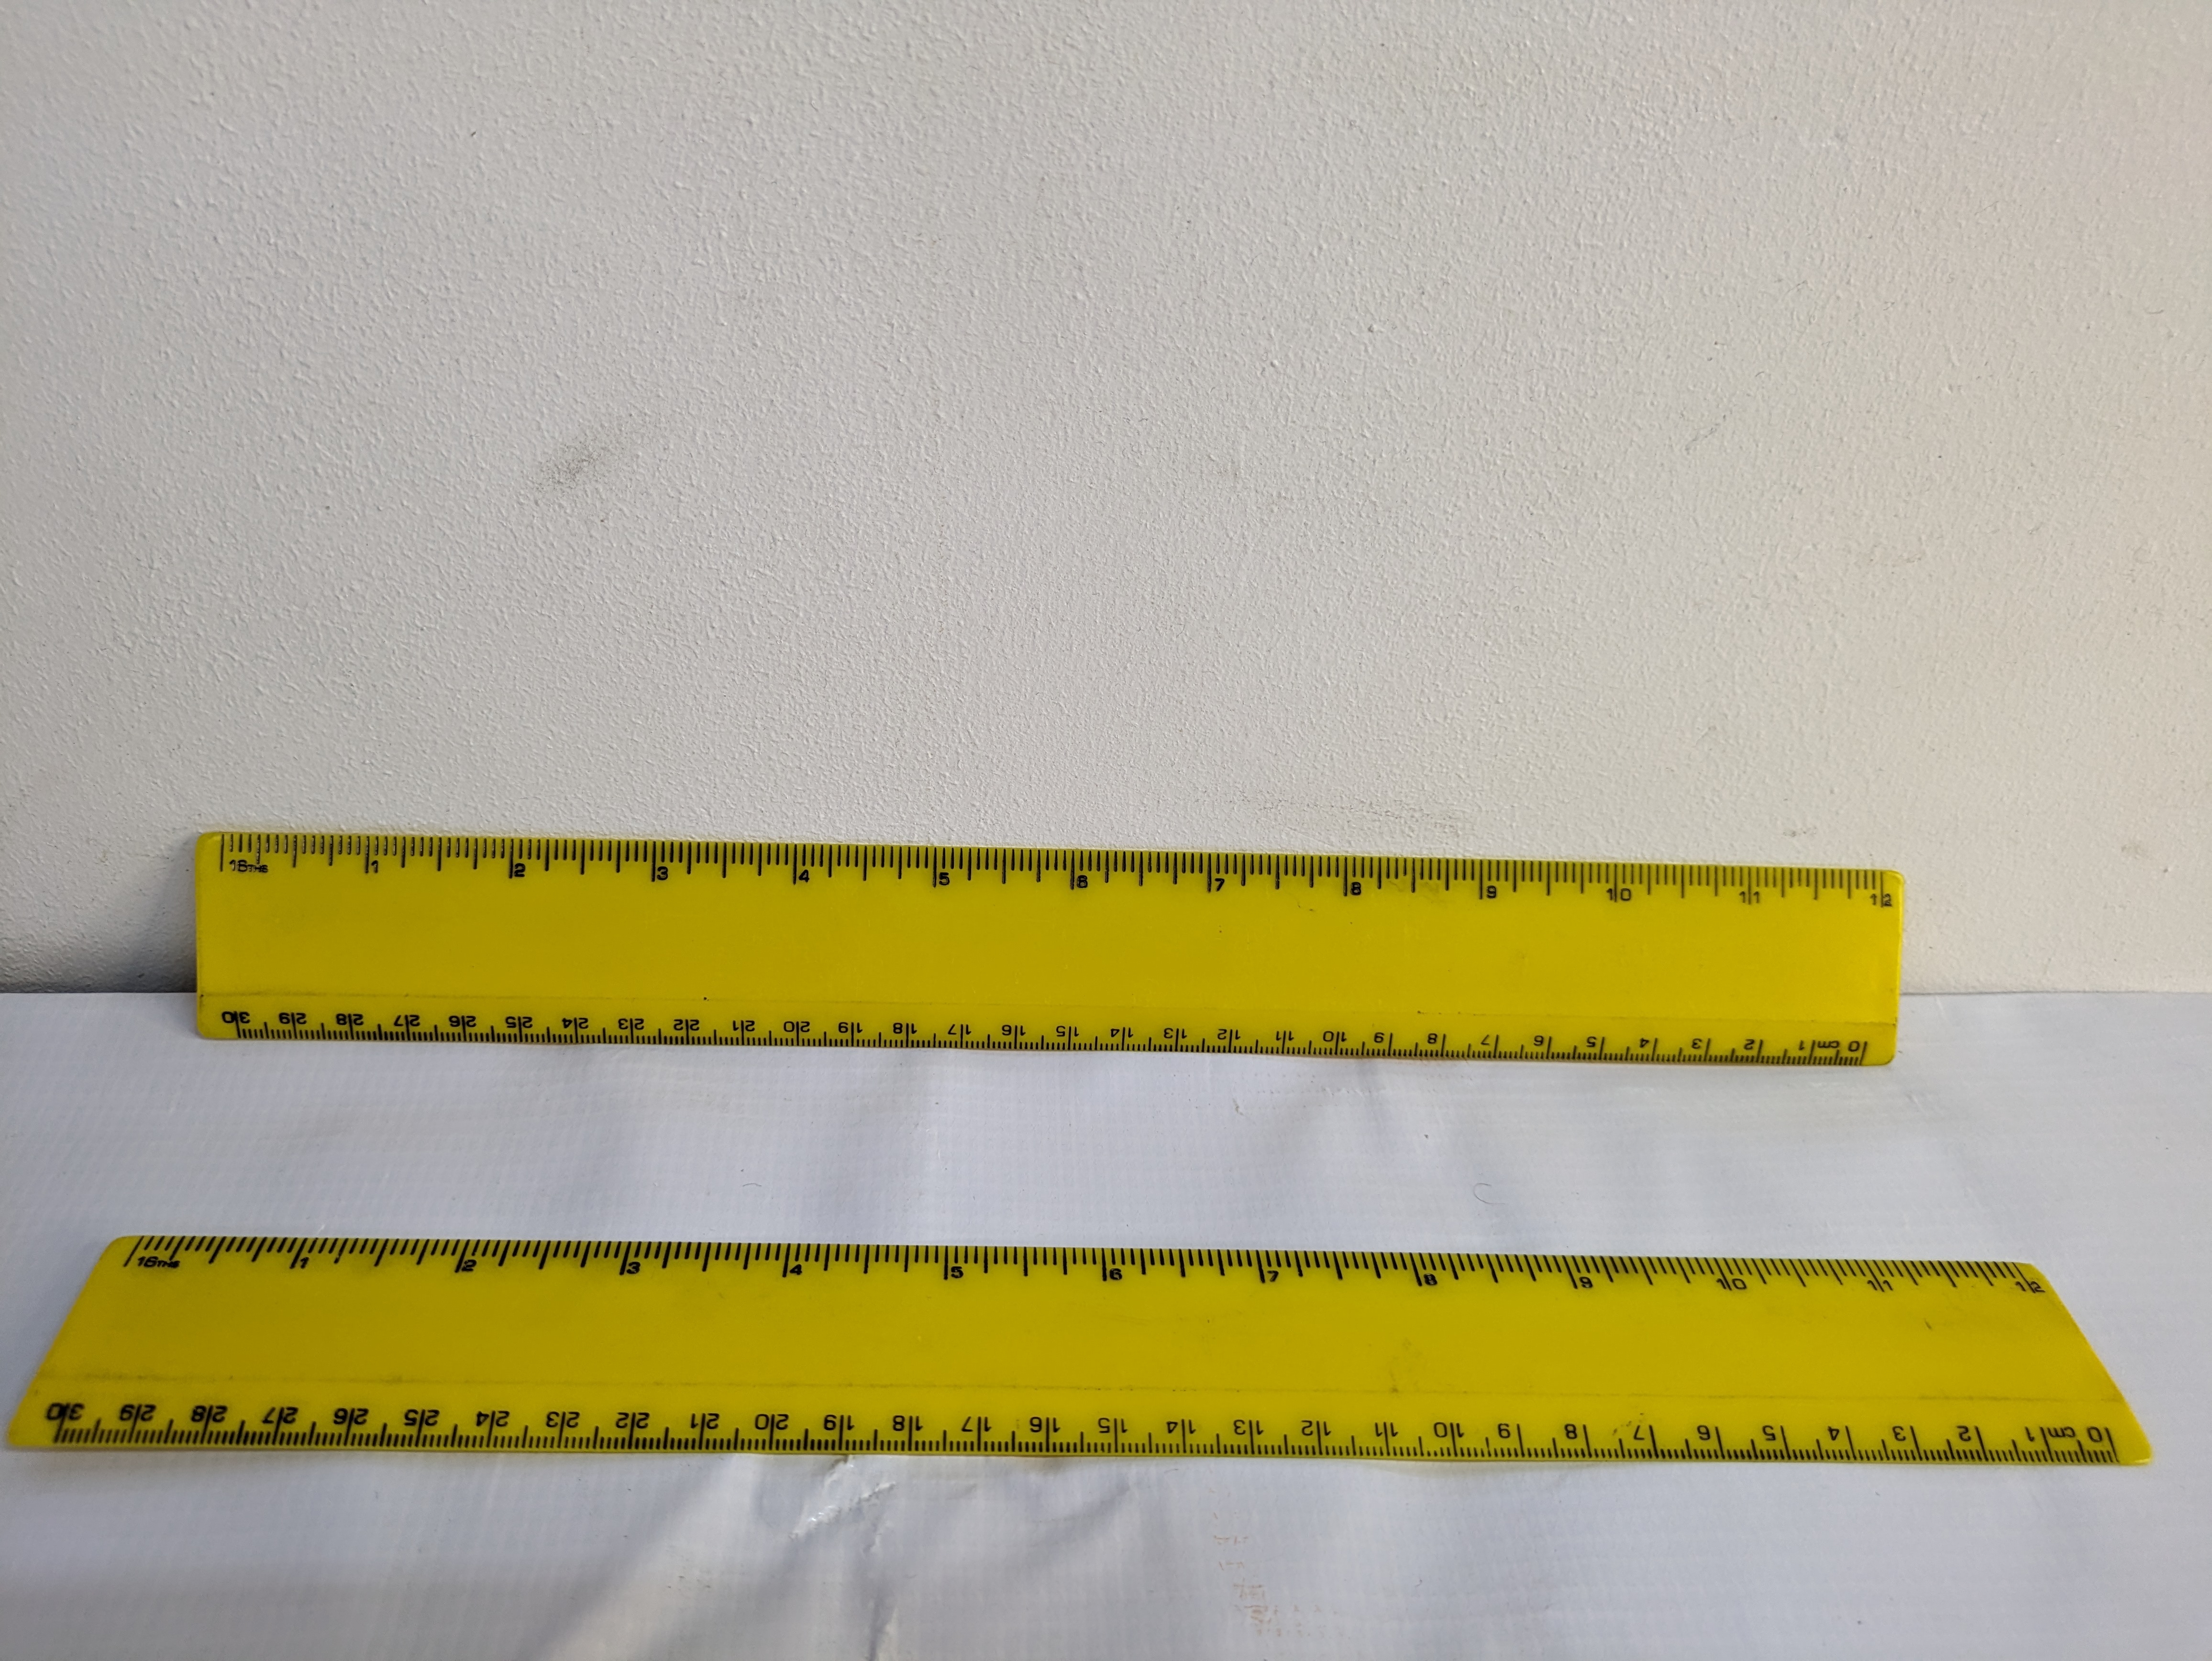 Brailled math ruler image